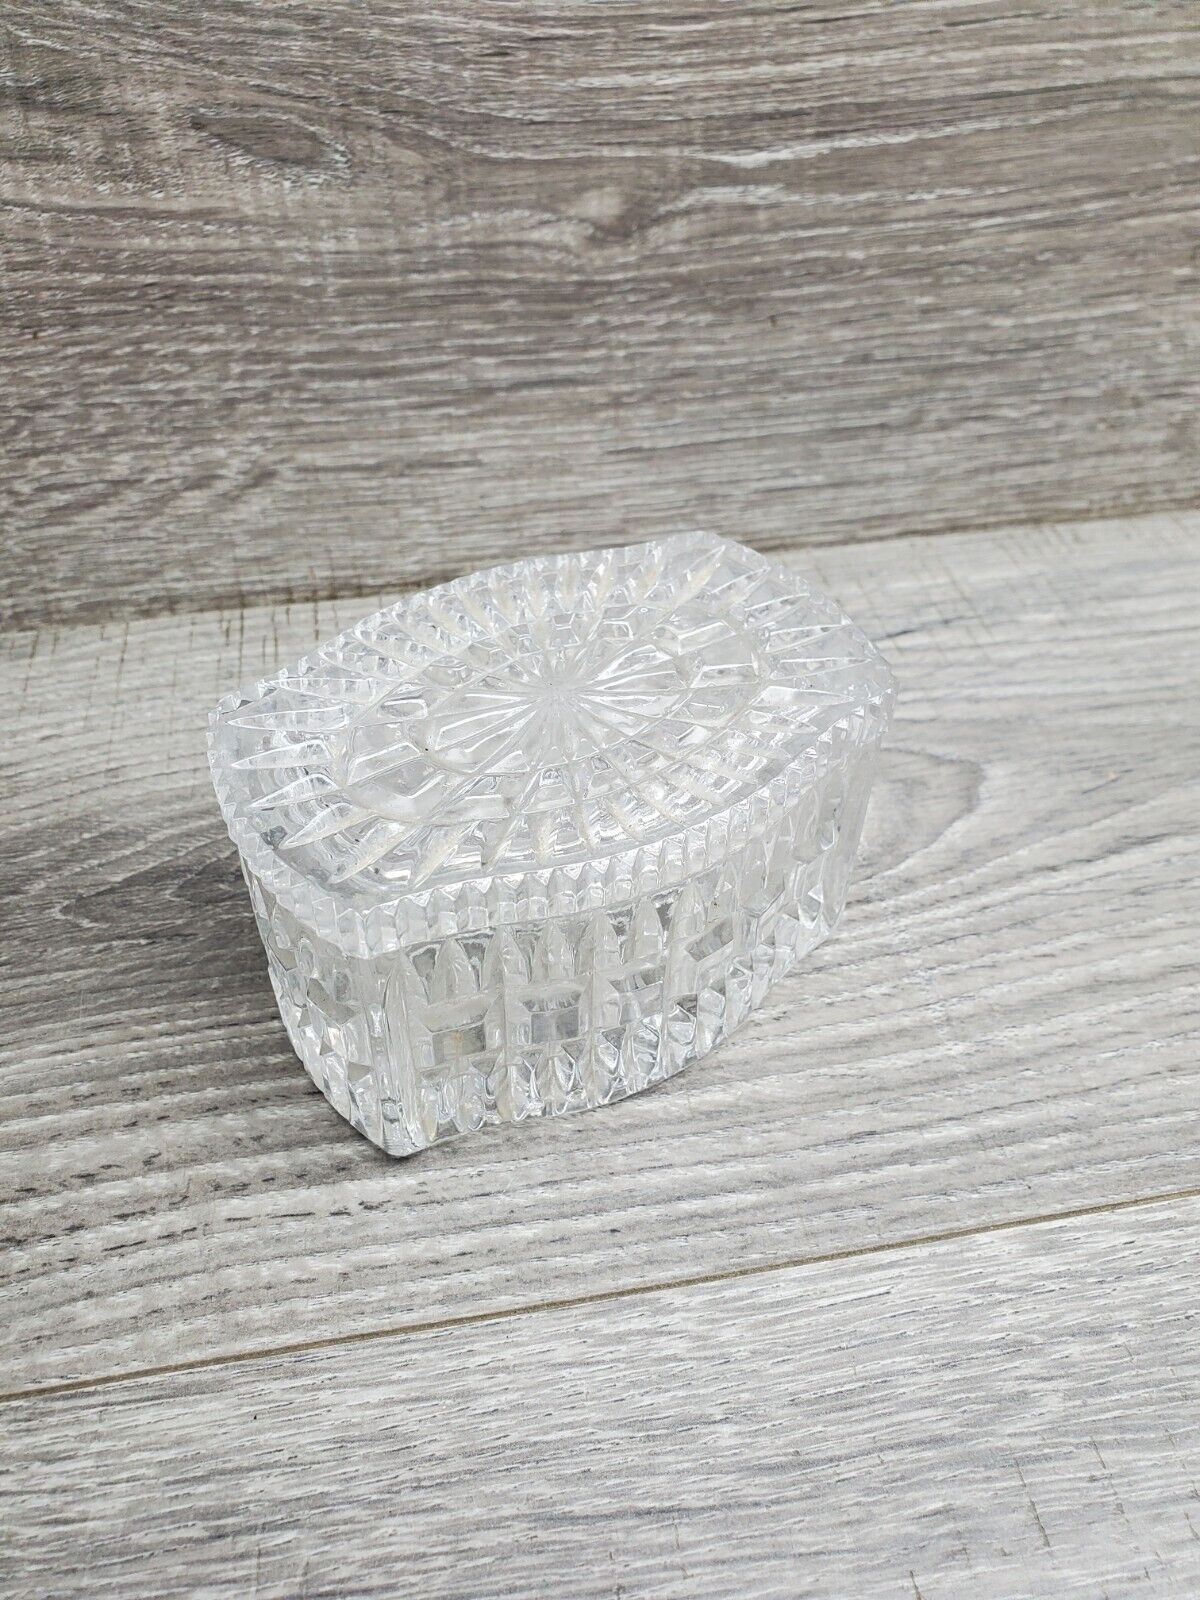 Vintage Crystal cut glass trinket box 